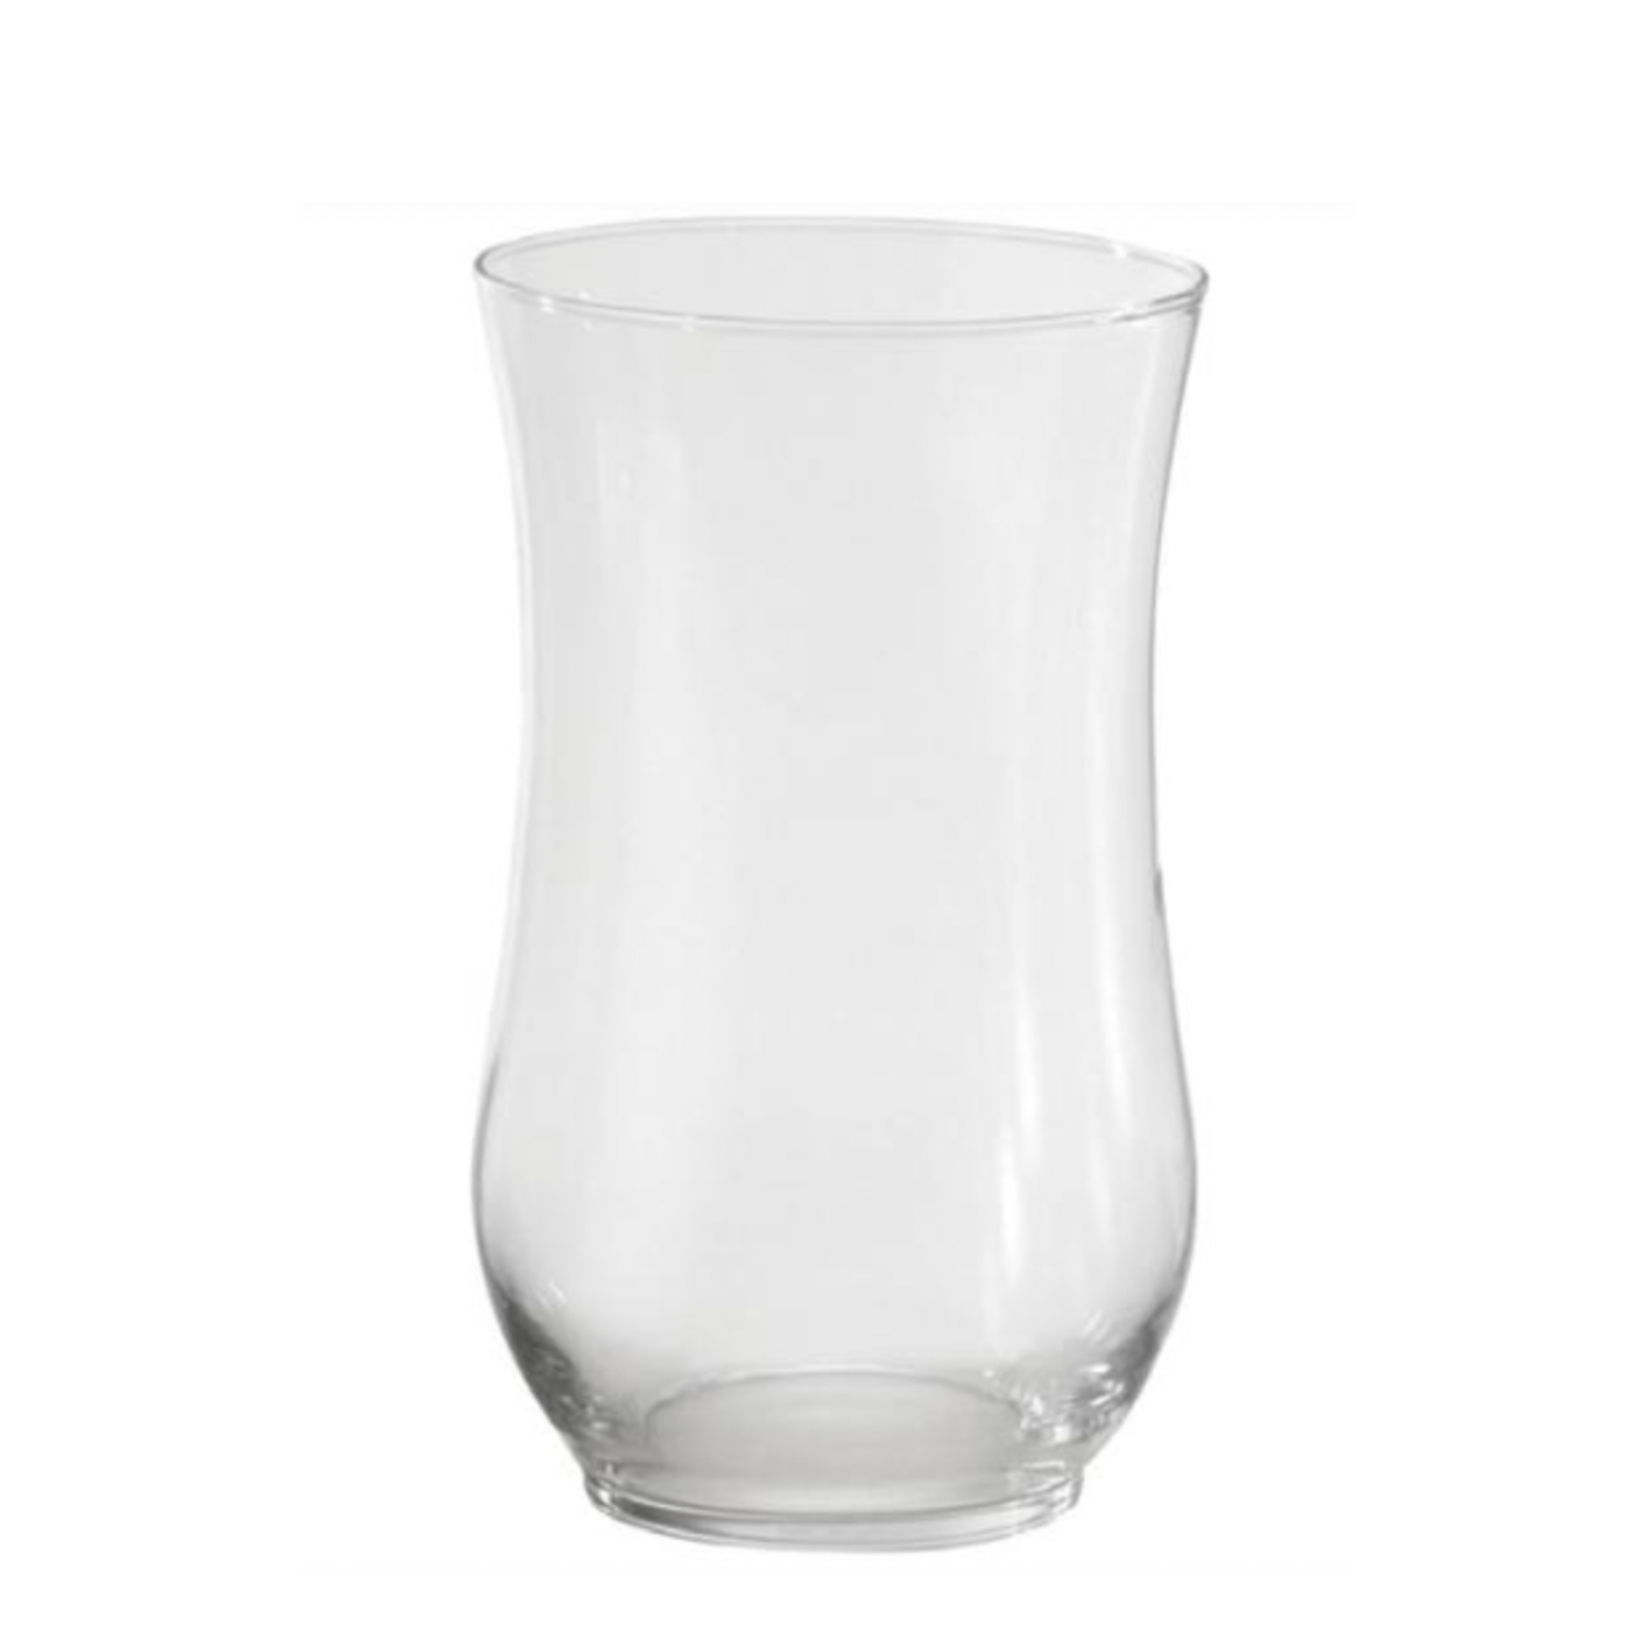 10.5”H X 6.25” GLASS HURRICANE VASE